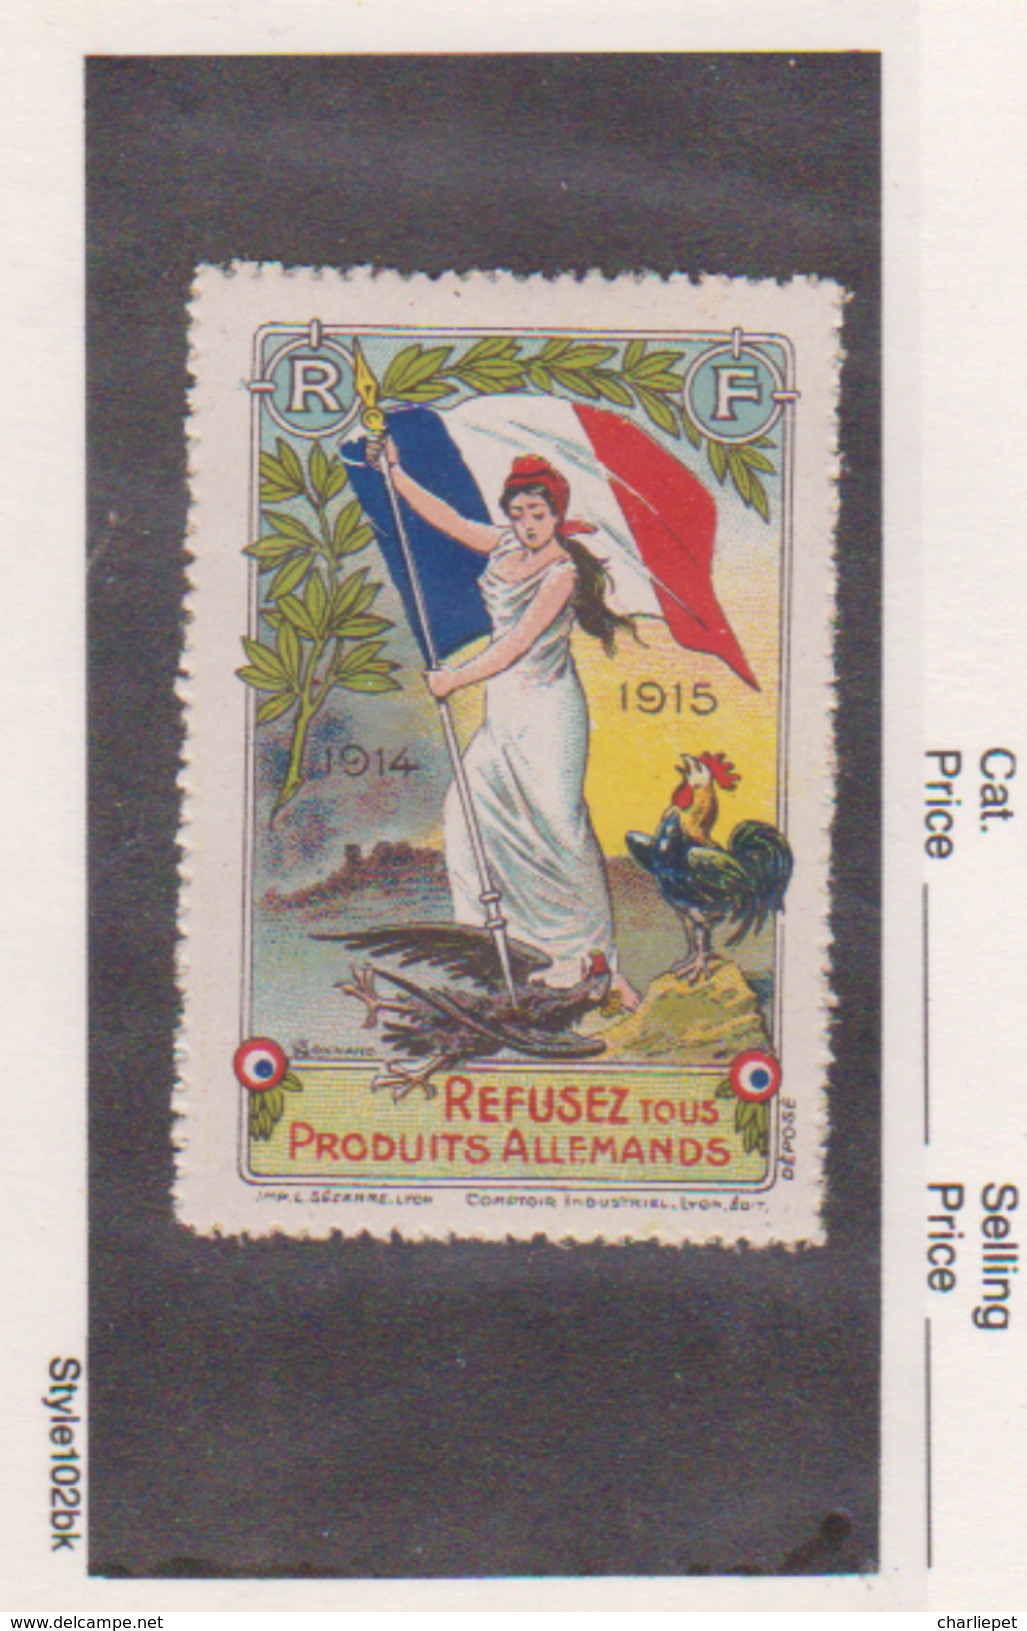 France WWI Refusez Tous Produits Allemands Vignette  Military Heritage Poster Stamp - Militair